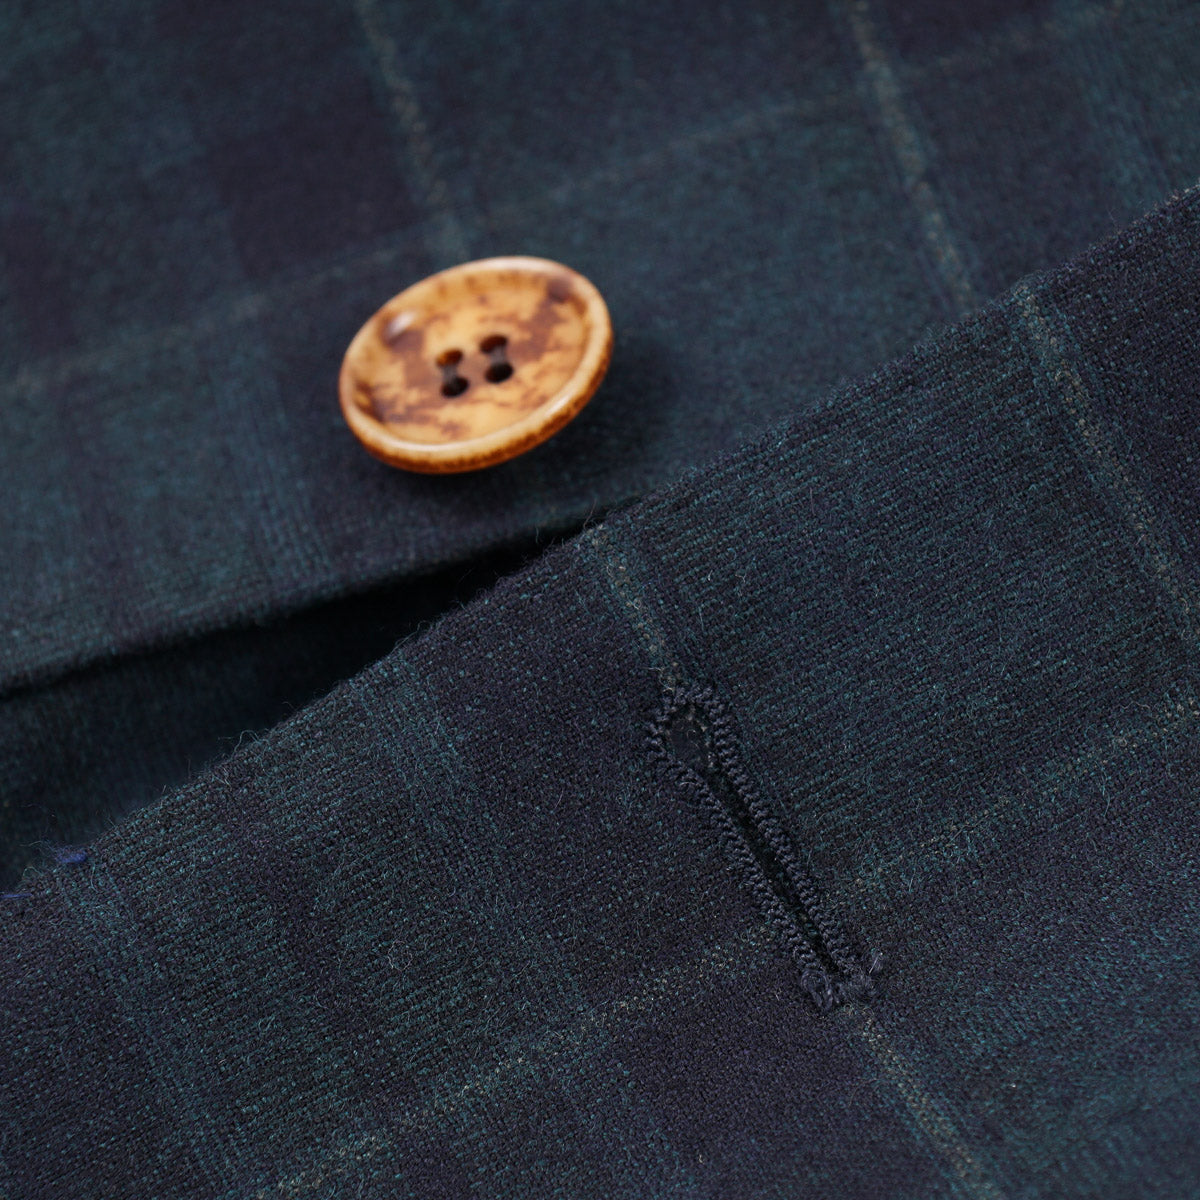 Sartorio Plaid Wool Suit with Peak Lapels - Top Shelf Apparel